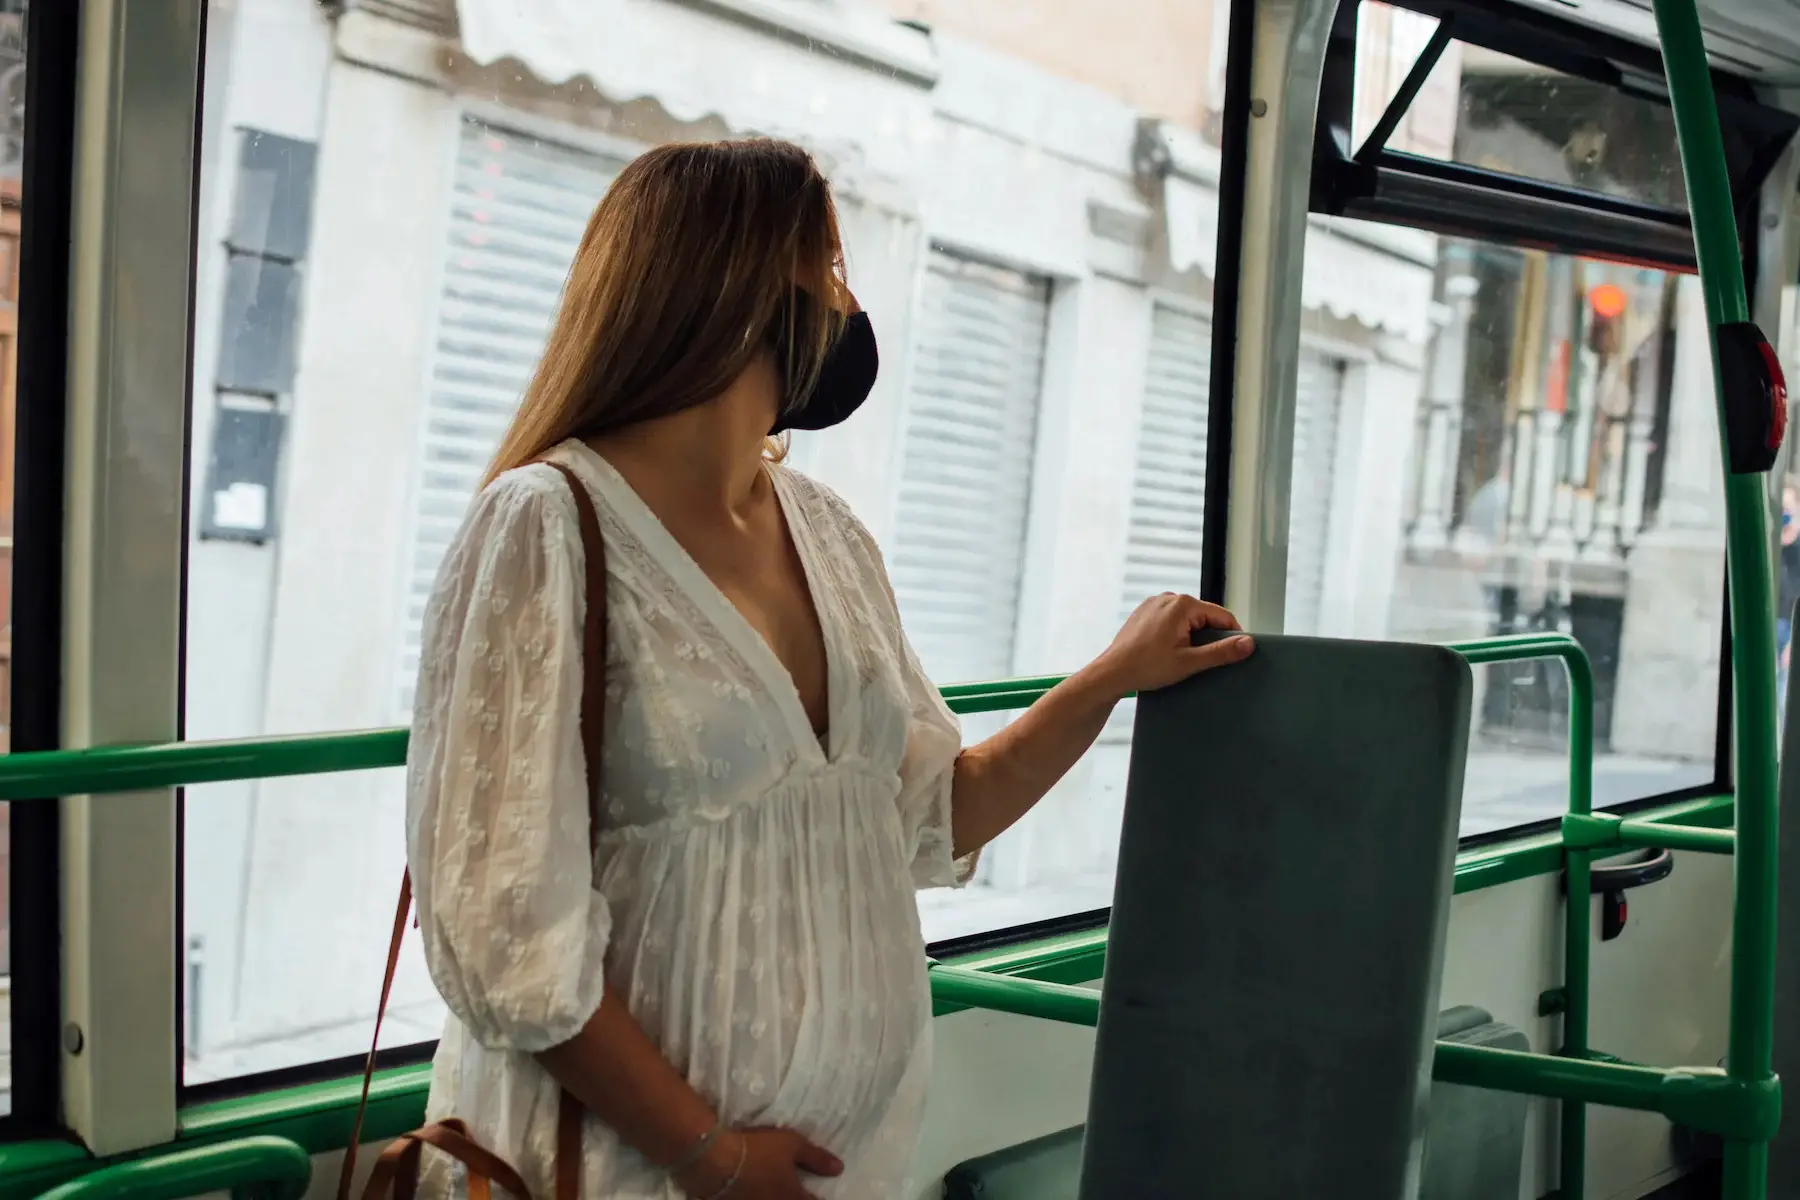 Pregnant woman taking a bus in an Italian city